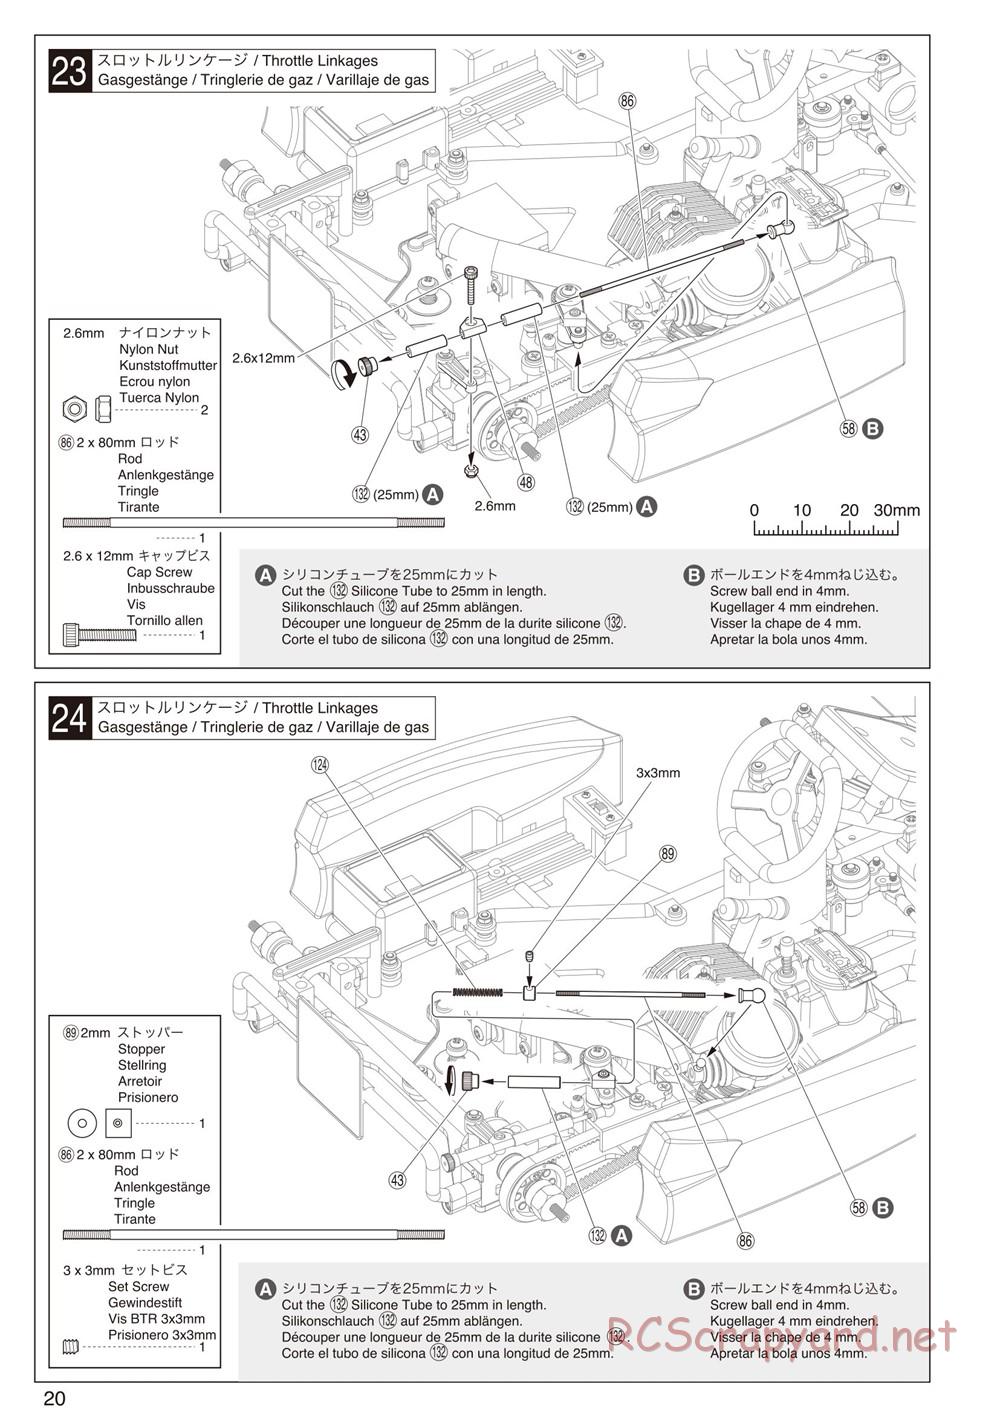 Kyosho - Birel R31-SE Kart - Manual - Page 20